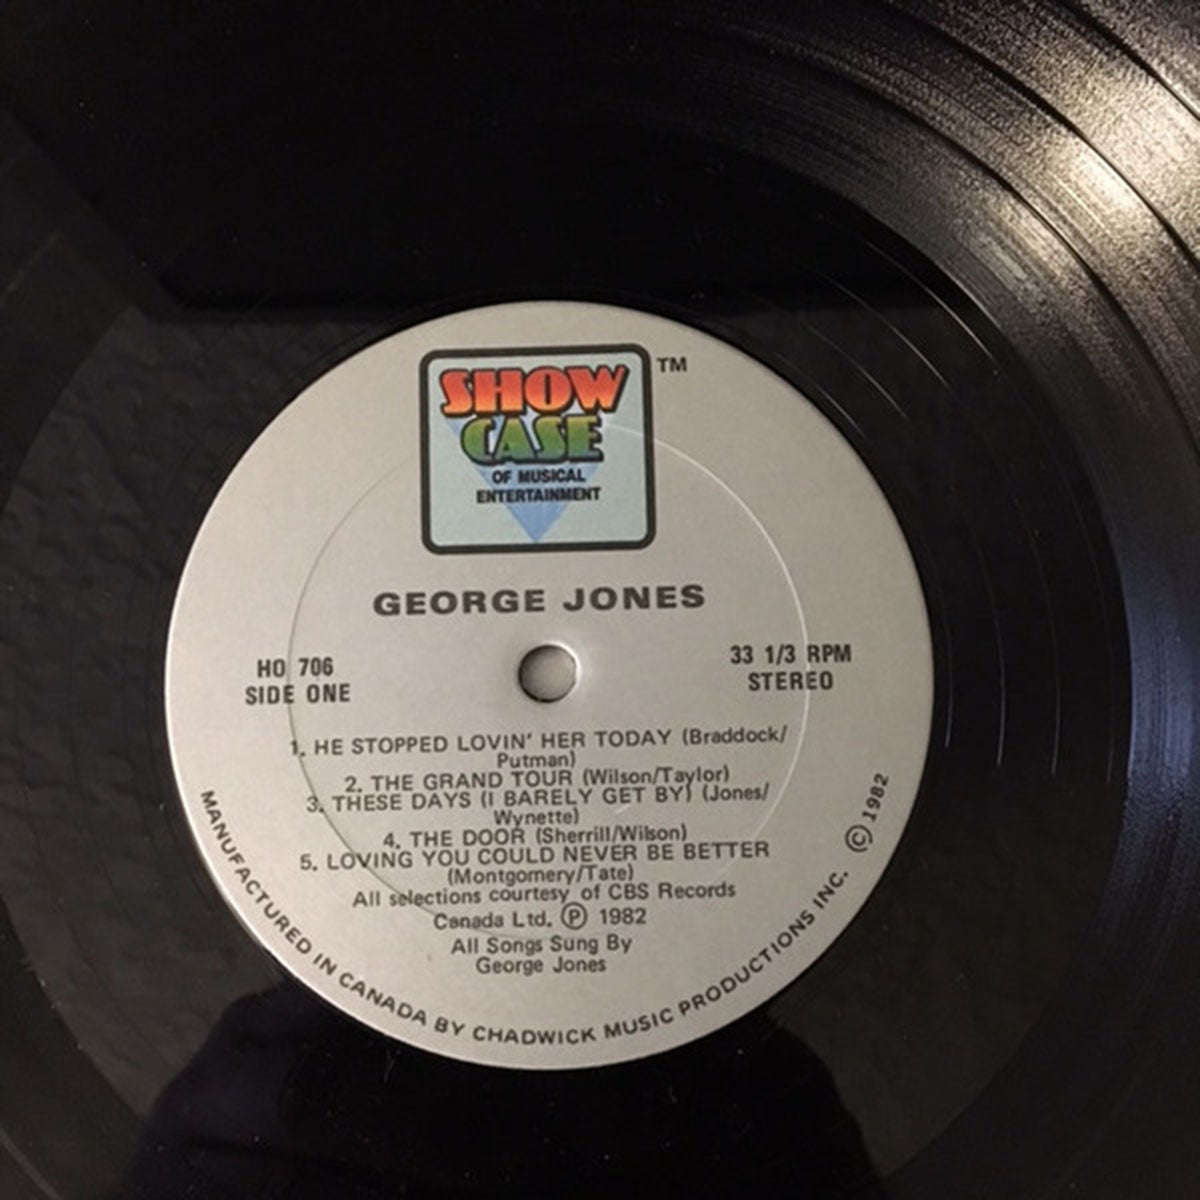 George Jones – George Jones His Original Hits